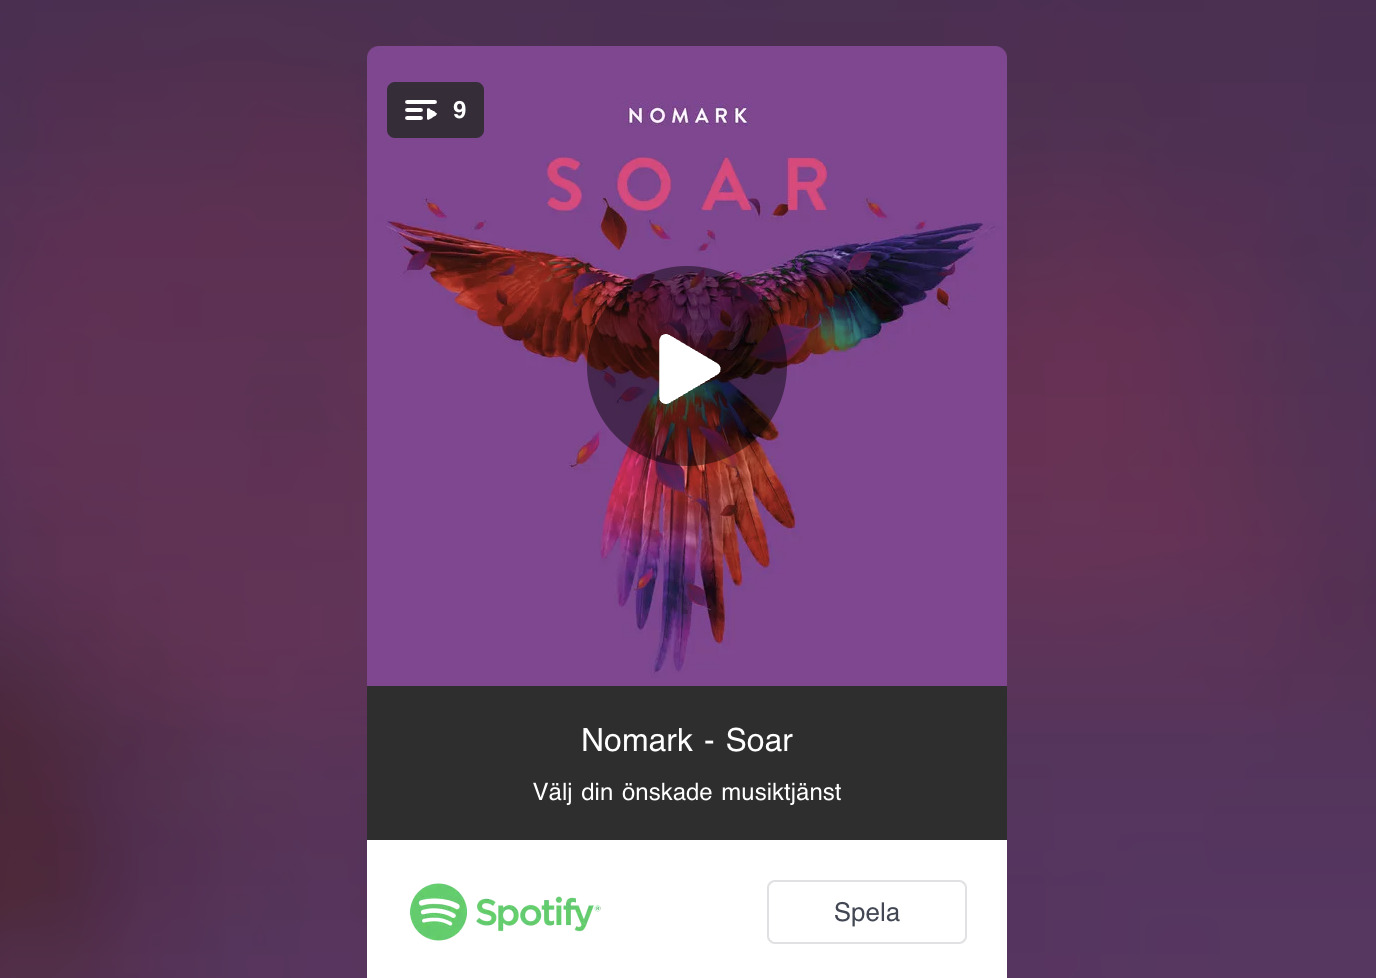 Nomark - Soar, nytt album med Åsa & Ulf Nomark